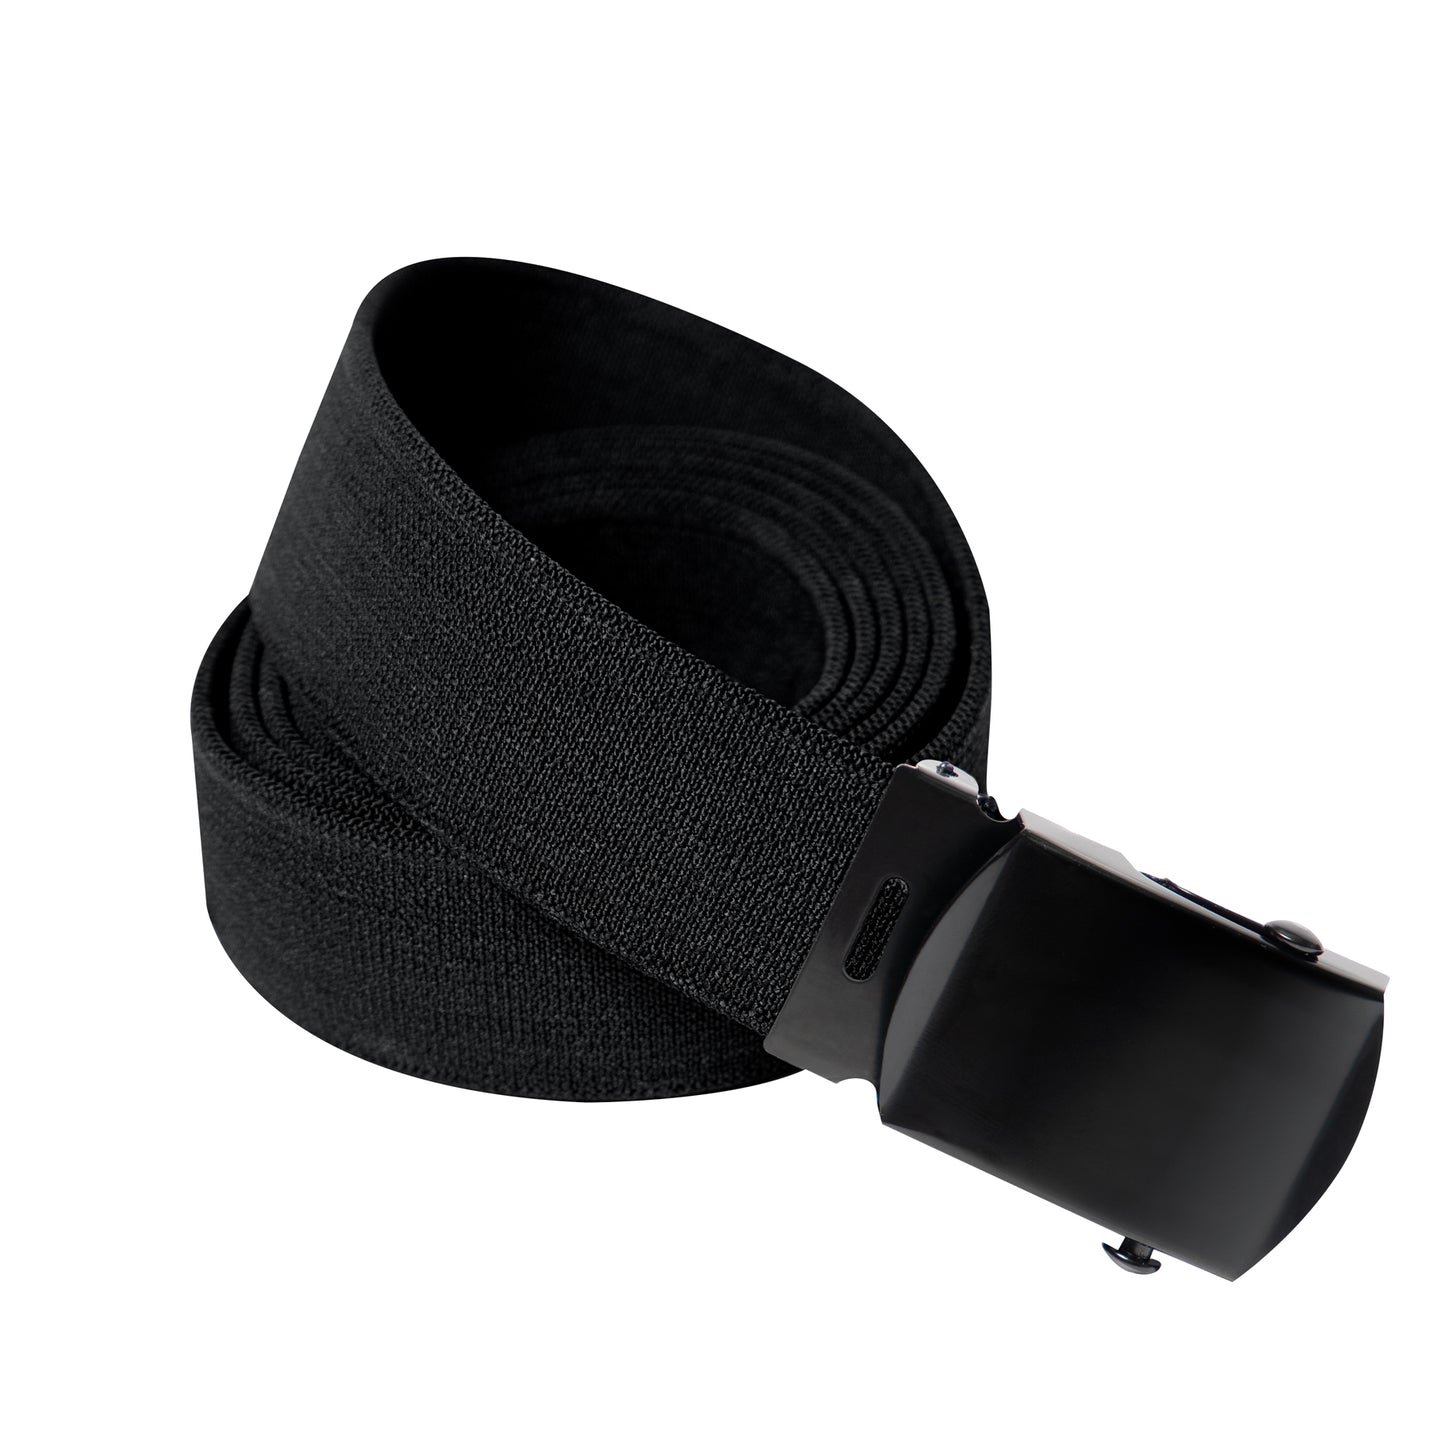 Elastic Stretch Web Belt - 54 Inches Long | Black